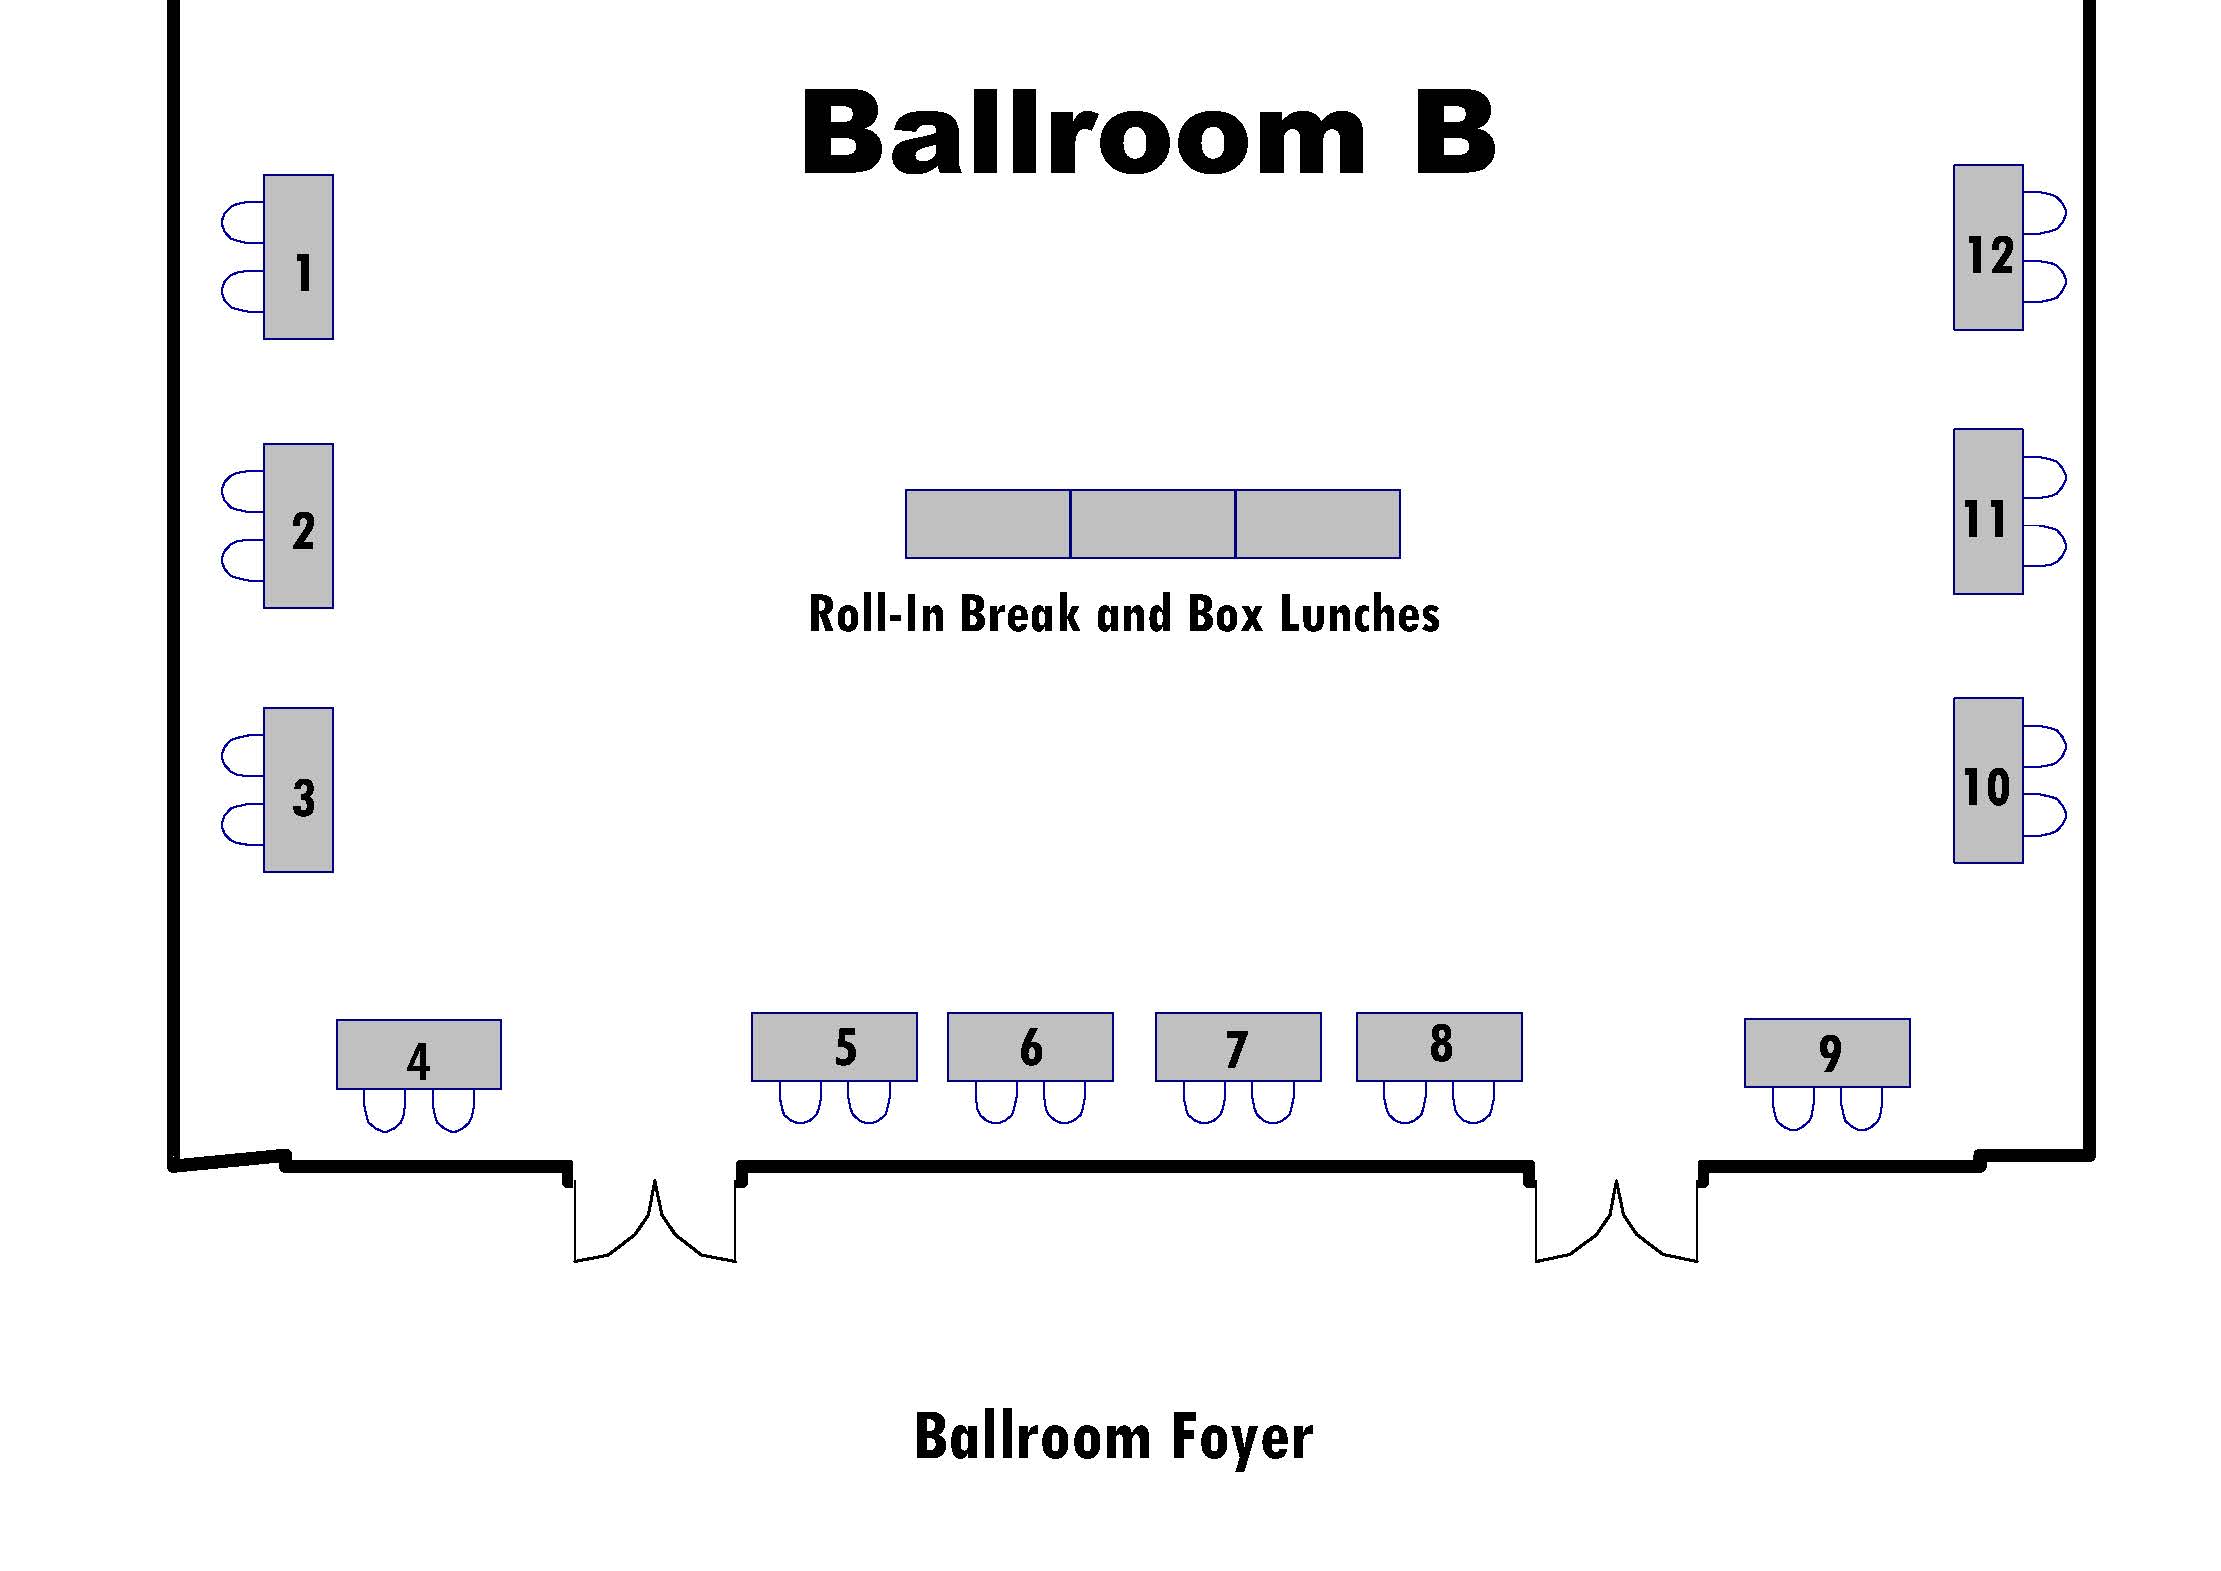 Exhibitor map for ballroom B